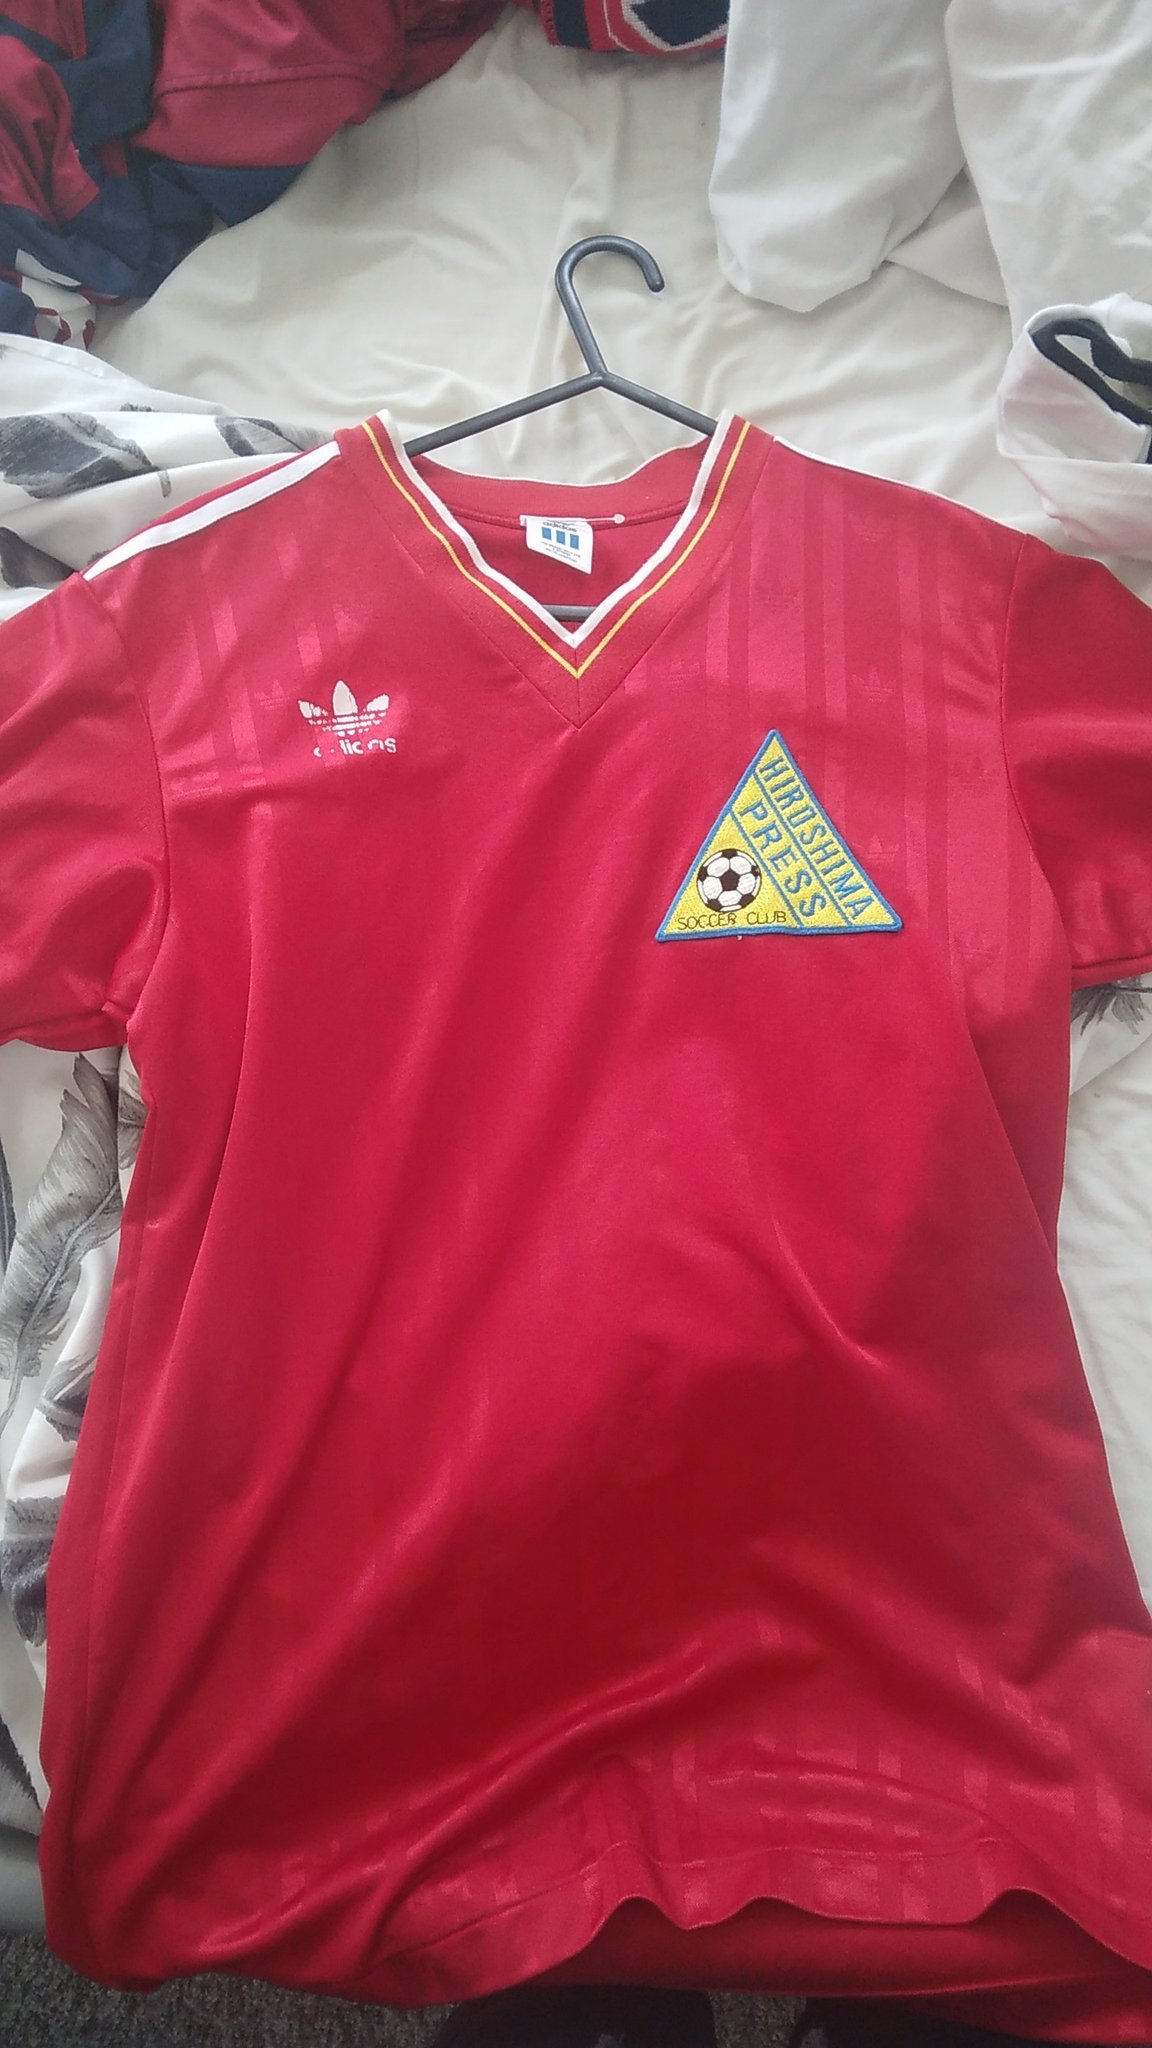 Buy Sagan Tosu Football Shirts - Club Football Shirts